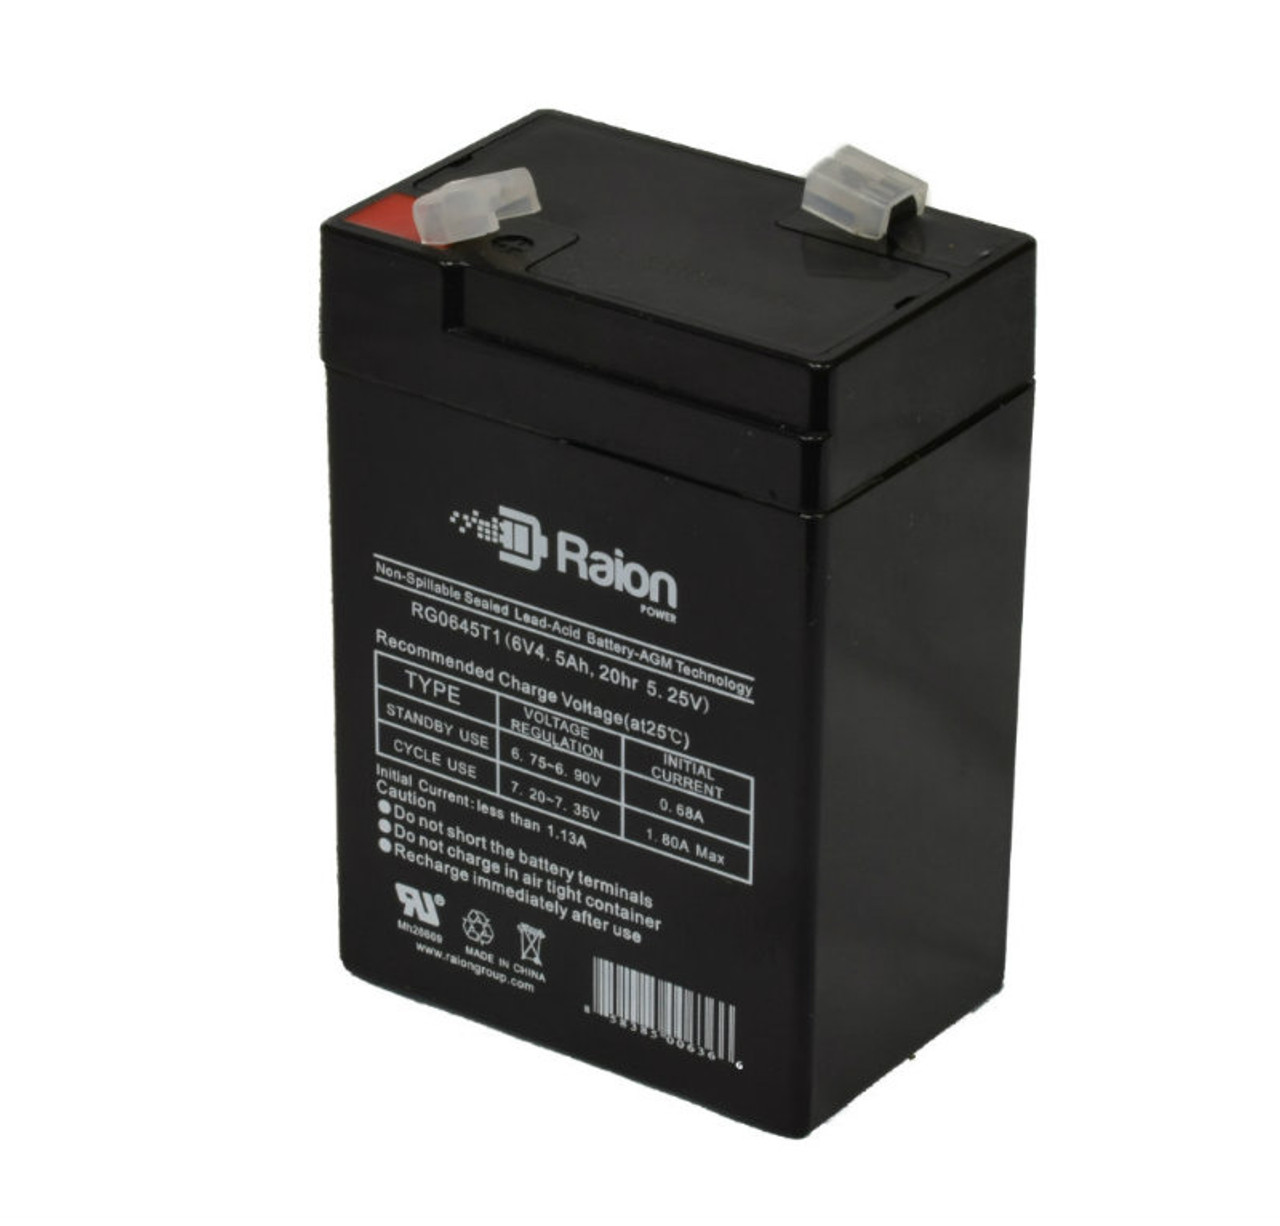 Raion Power RG0645T1 6V 4.5Ah Replacement Battery Cartridge for Streamlight Vulcan